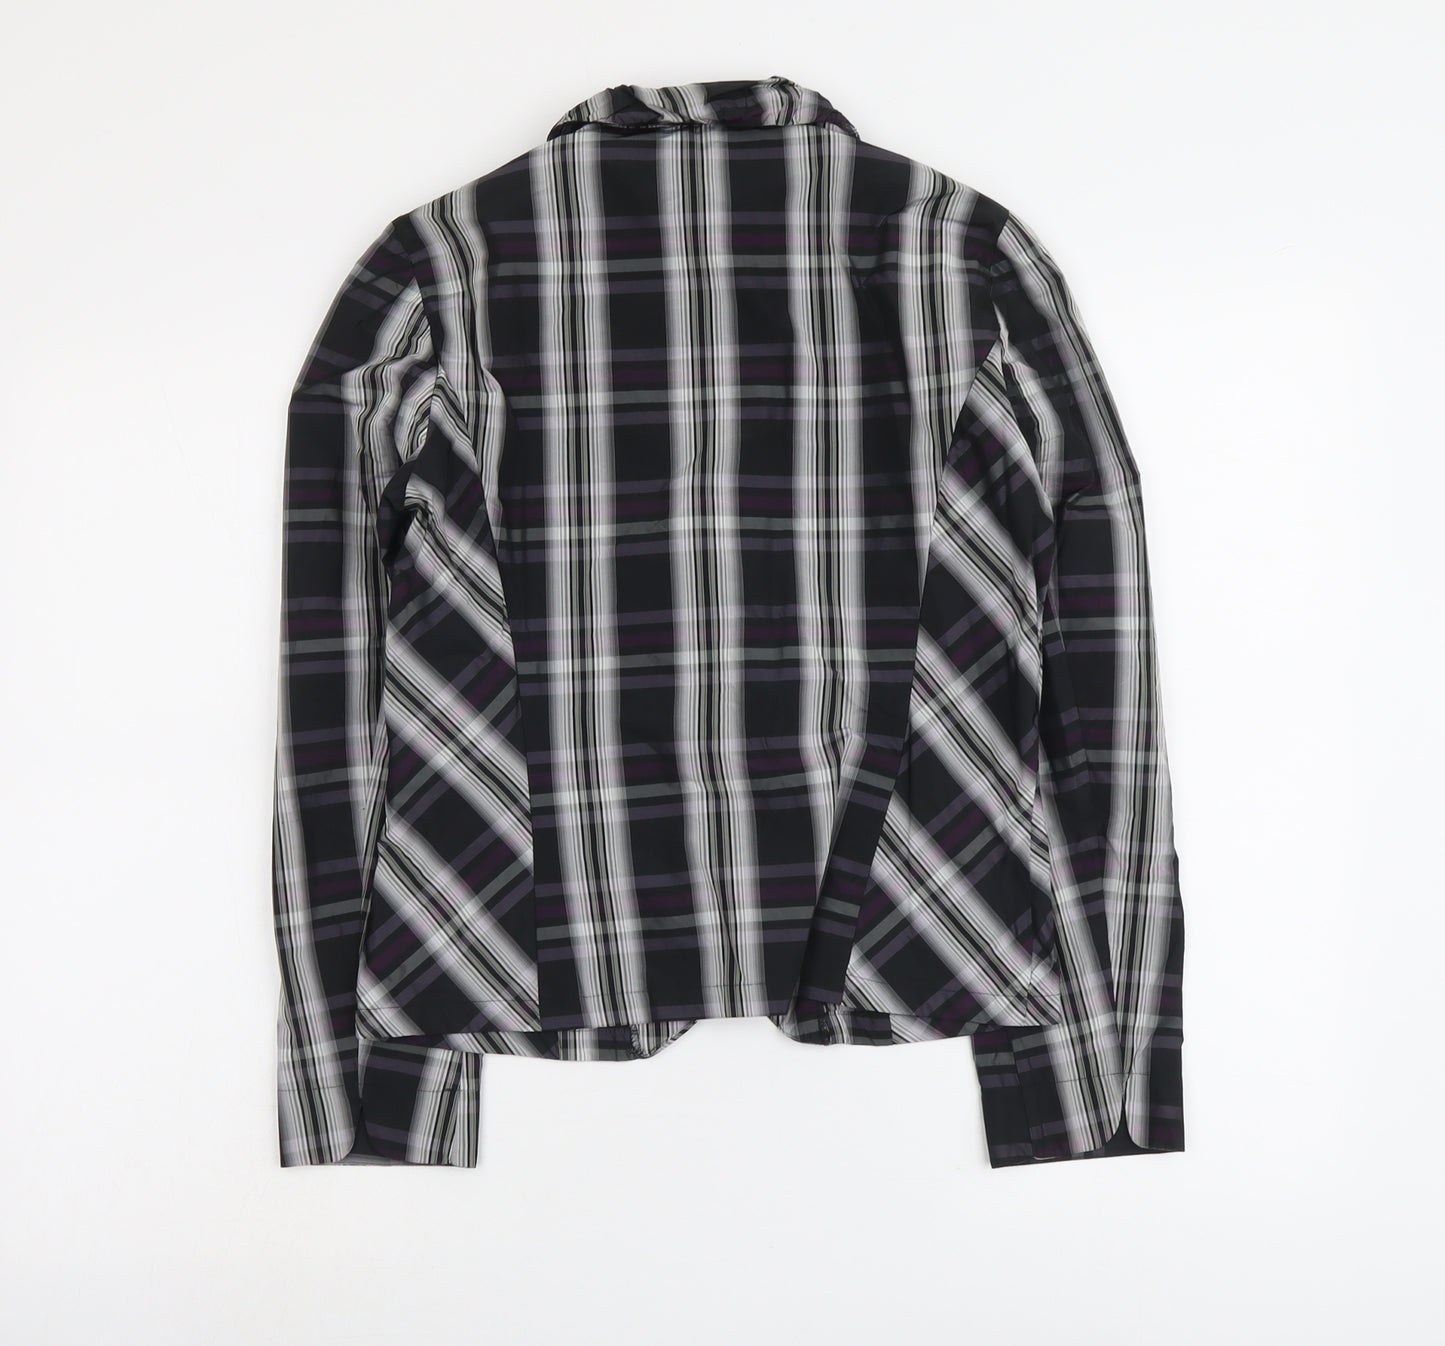 KS.Selection Womens Black Plaid Polyester Jacket Blazer Size 10